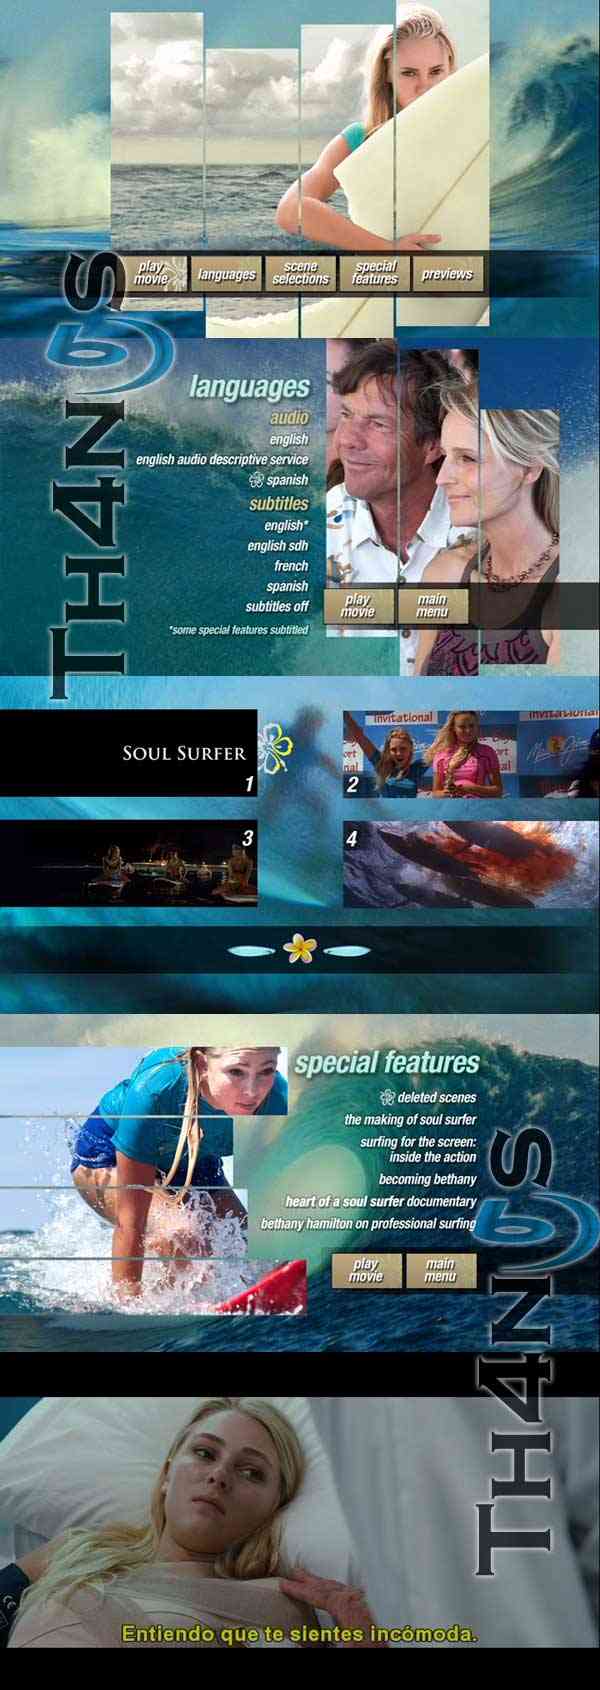 "Soul Surfer DVD Latino"